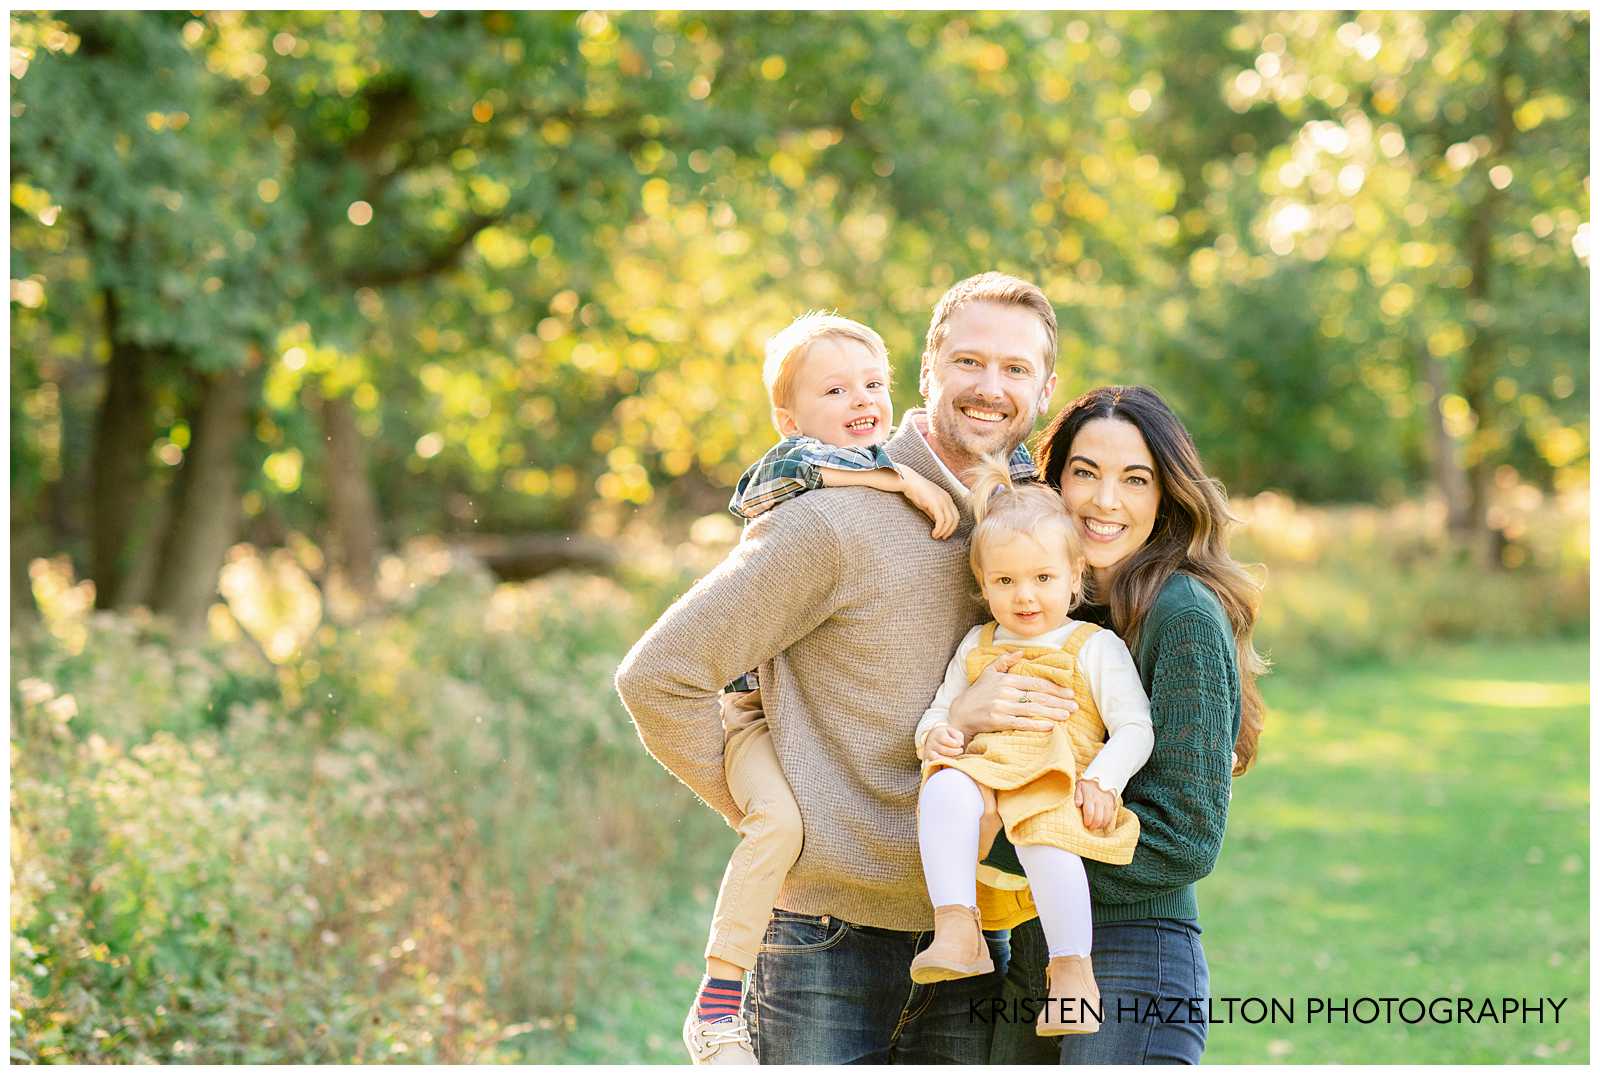 Family of four with two toddler children, smiling in a grassy field by Elmhurst family photographer Kristen Hazelton